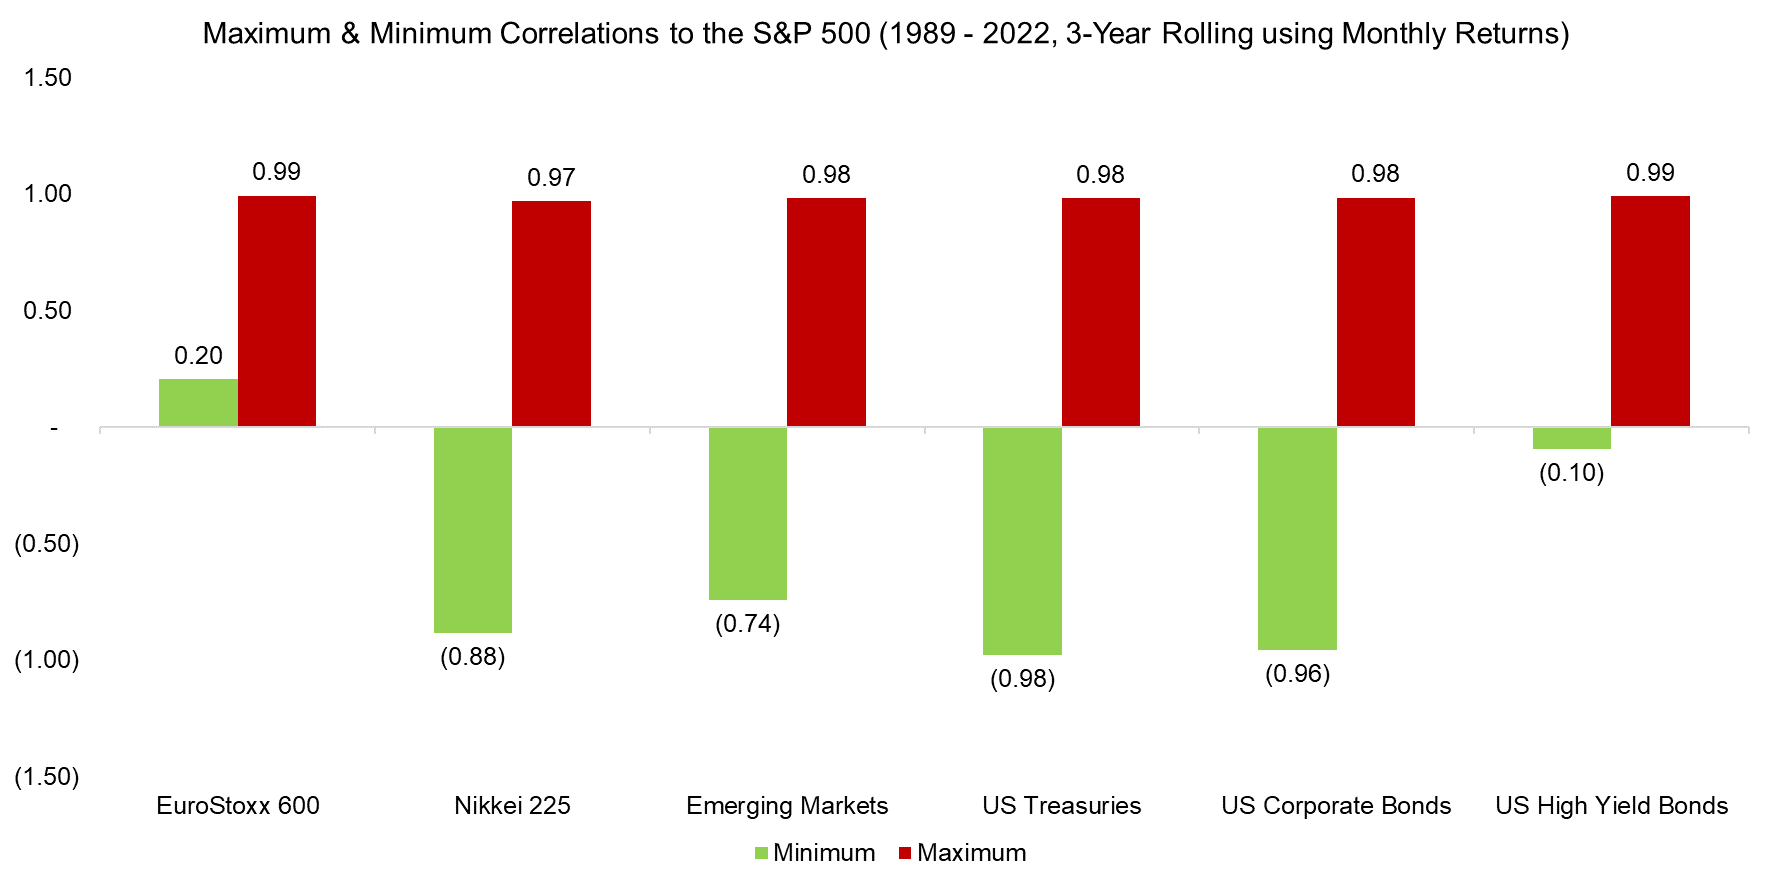 Maximum & Minimum Correlations to the S&P 500 (1989 - 2022, 3-Year Rolling using Monthly Returns)